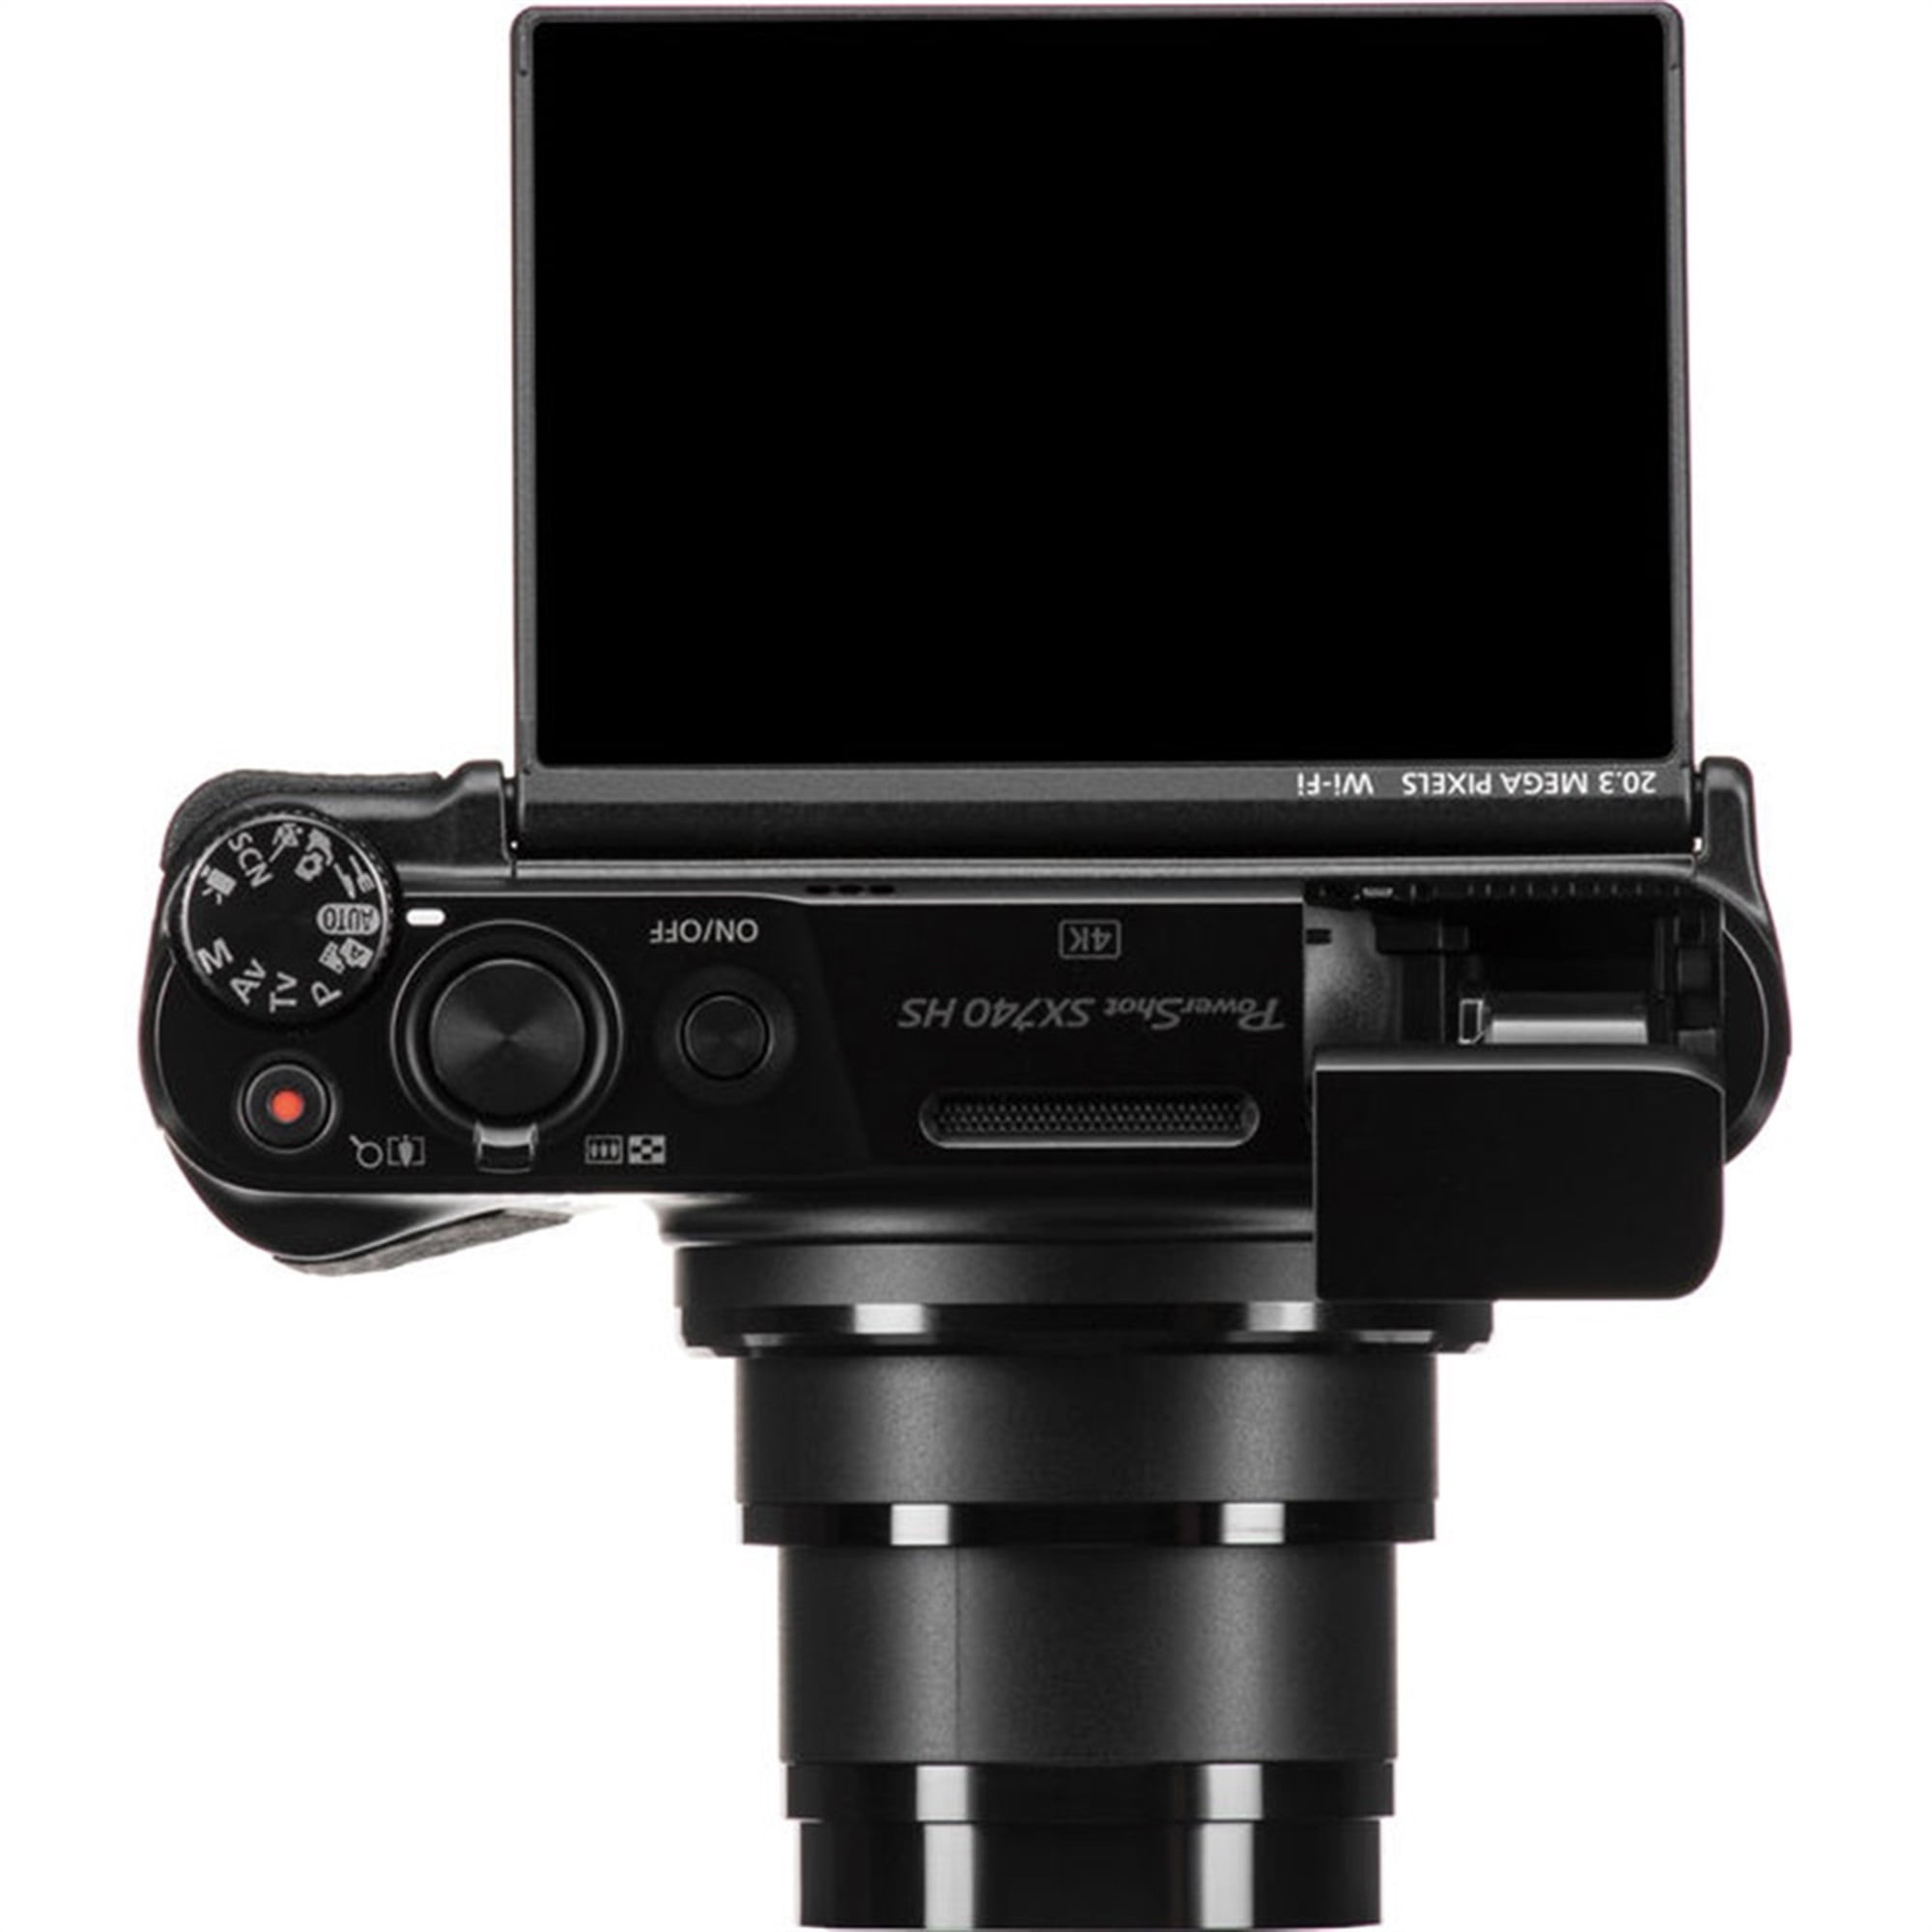 Canon Powershot Sx420 20.0 Mp Digital Camera Black - Canon Sx740 Digital  Camera - Aliexpress